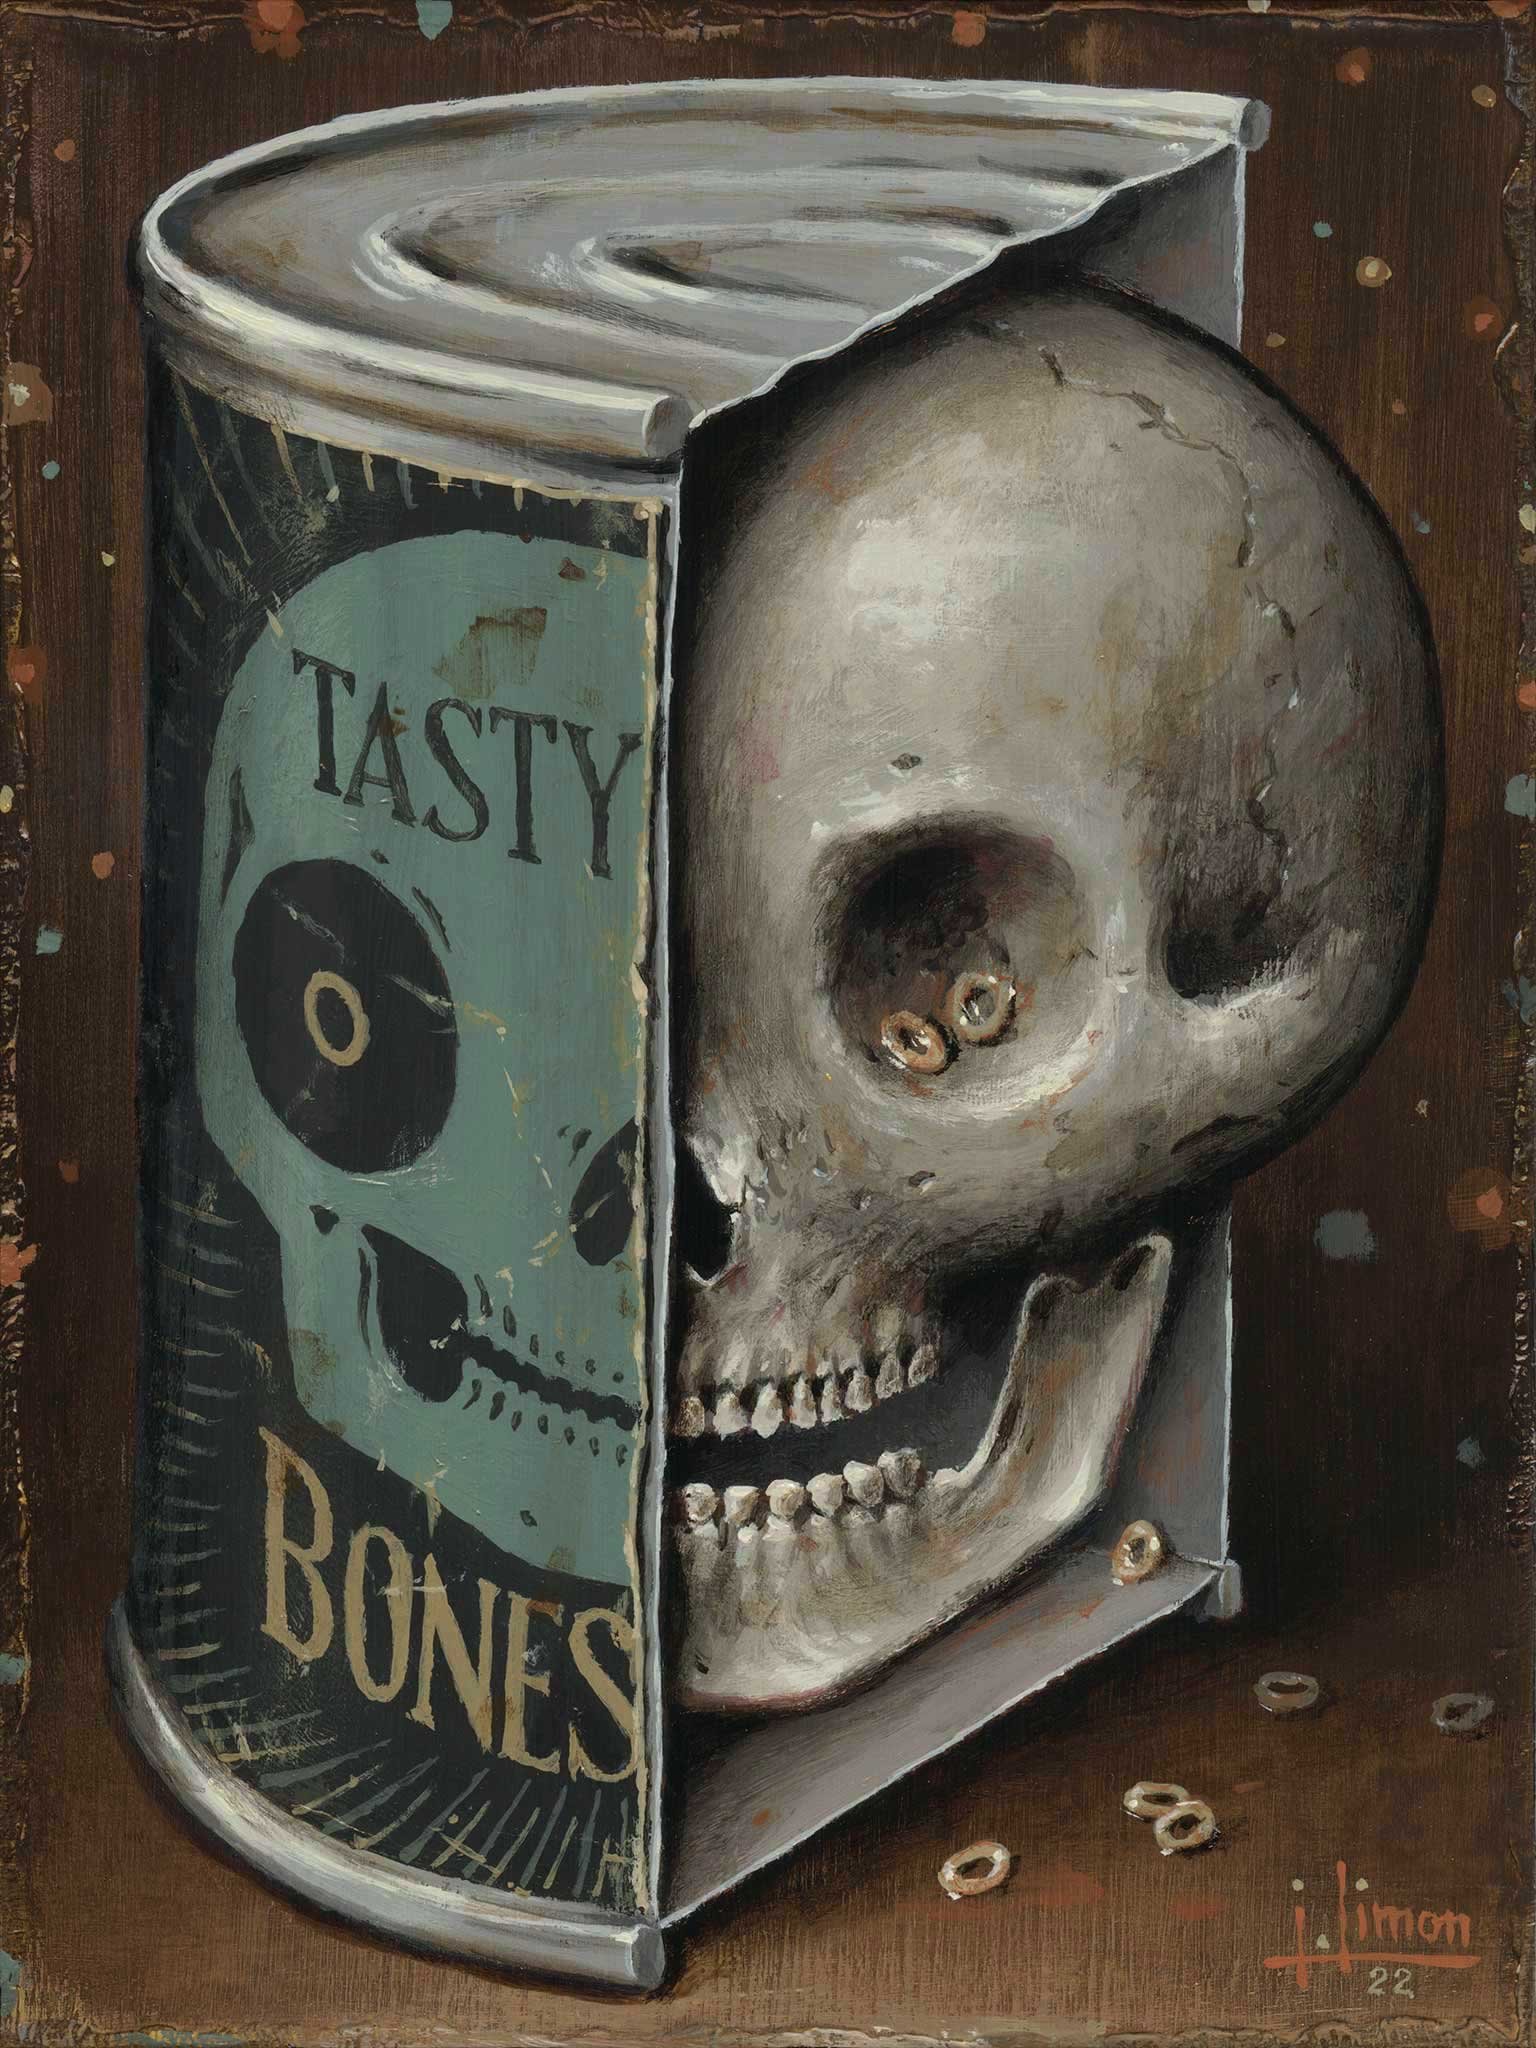 Tasty Bones